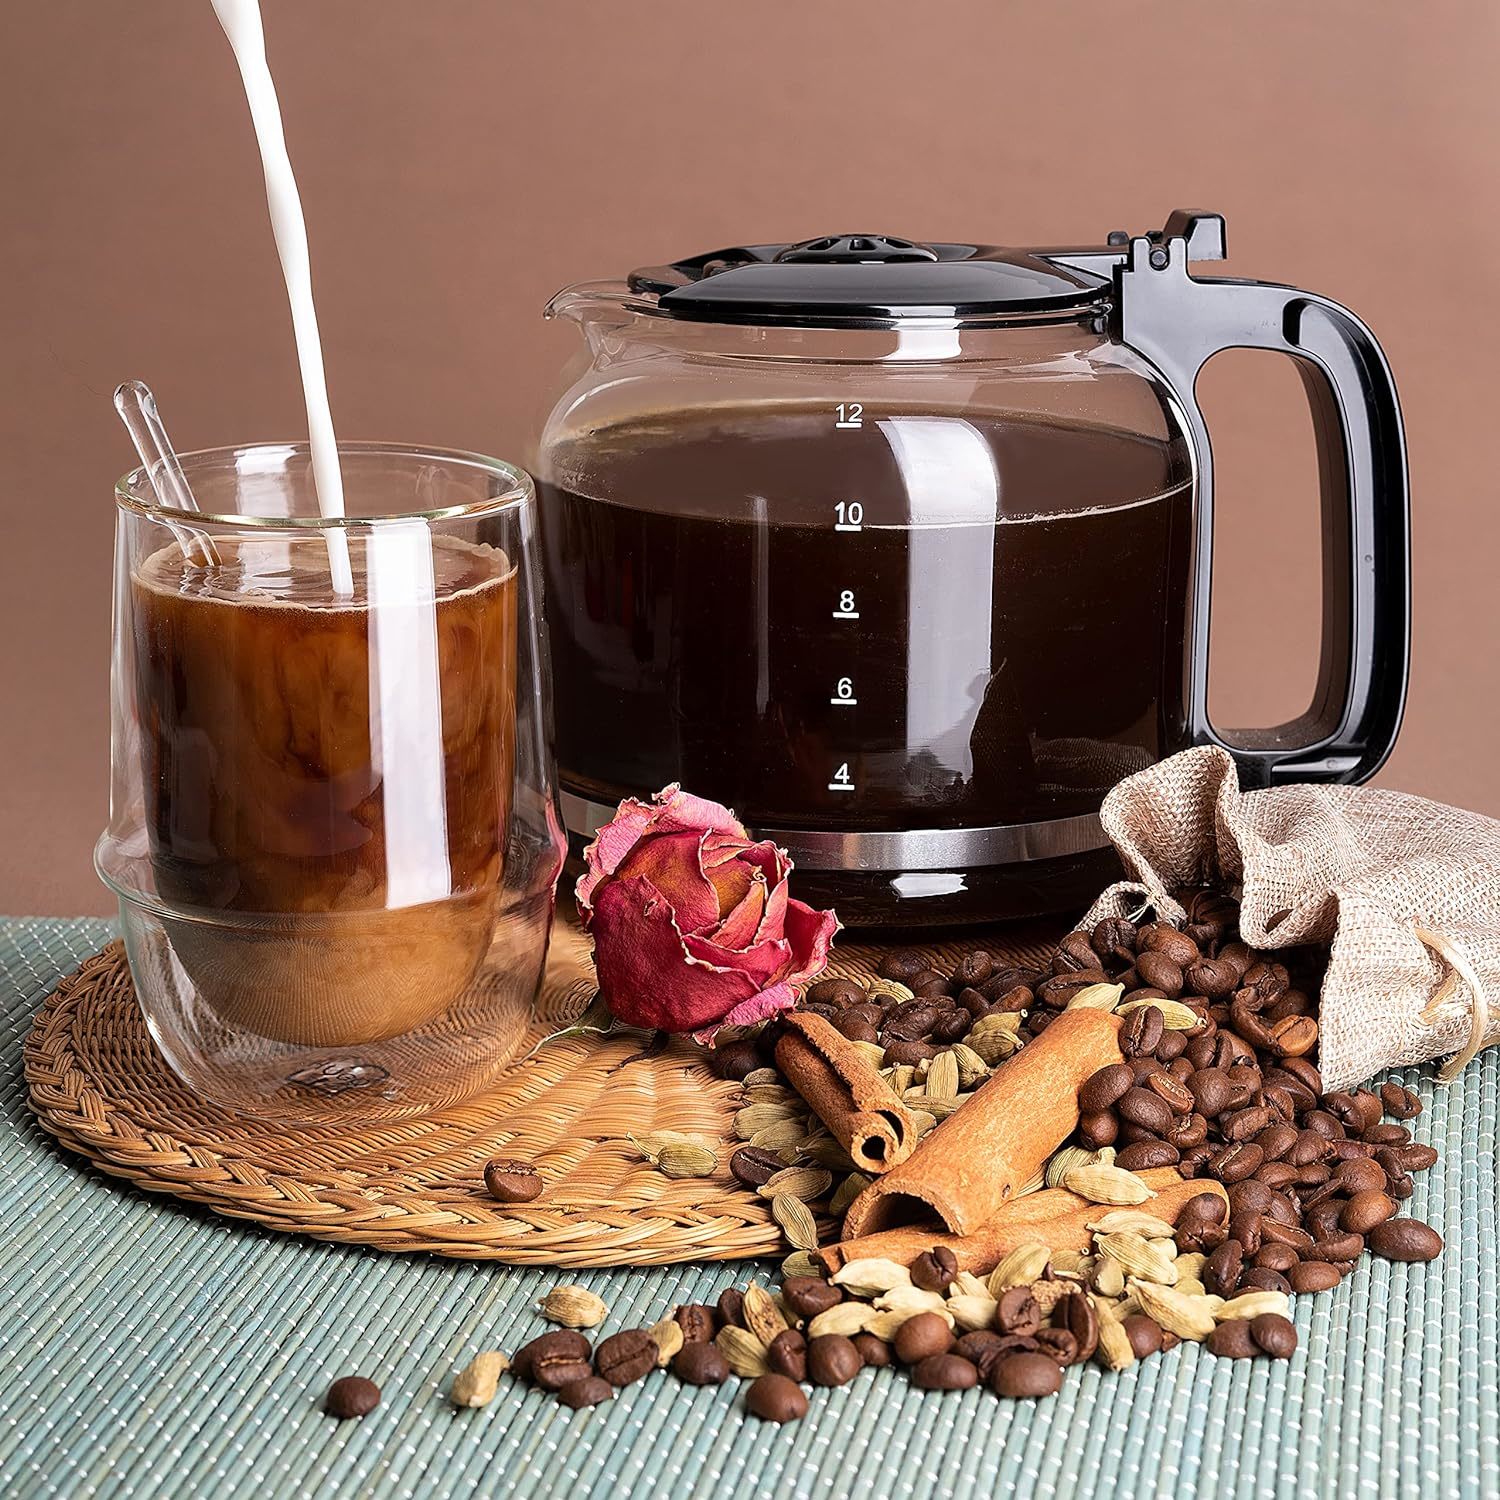  Mixpresso 5-Cup Drip Coffee Maker, Coffee Pot Machine